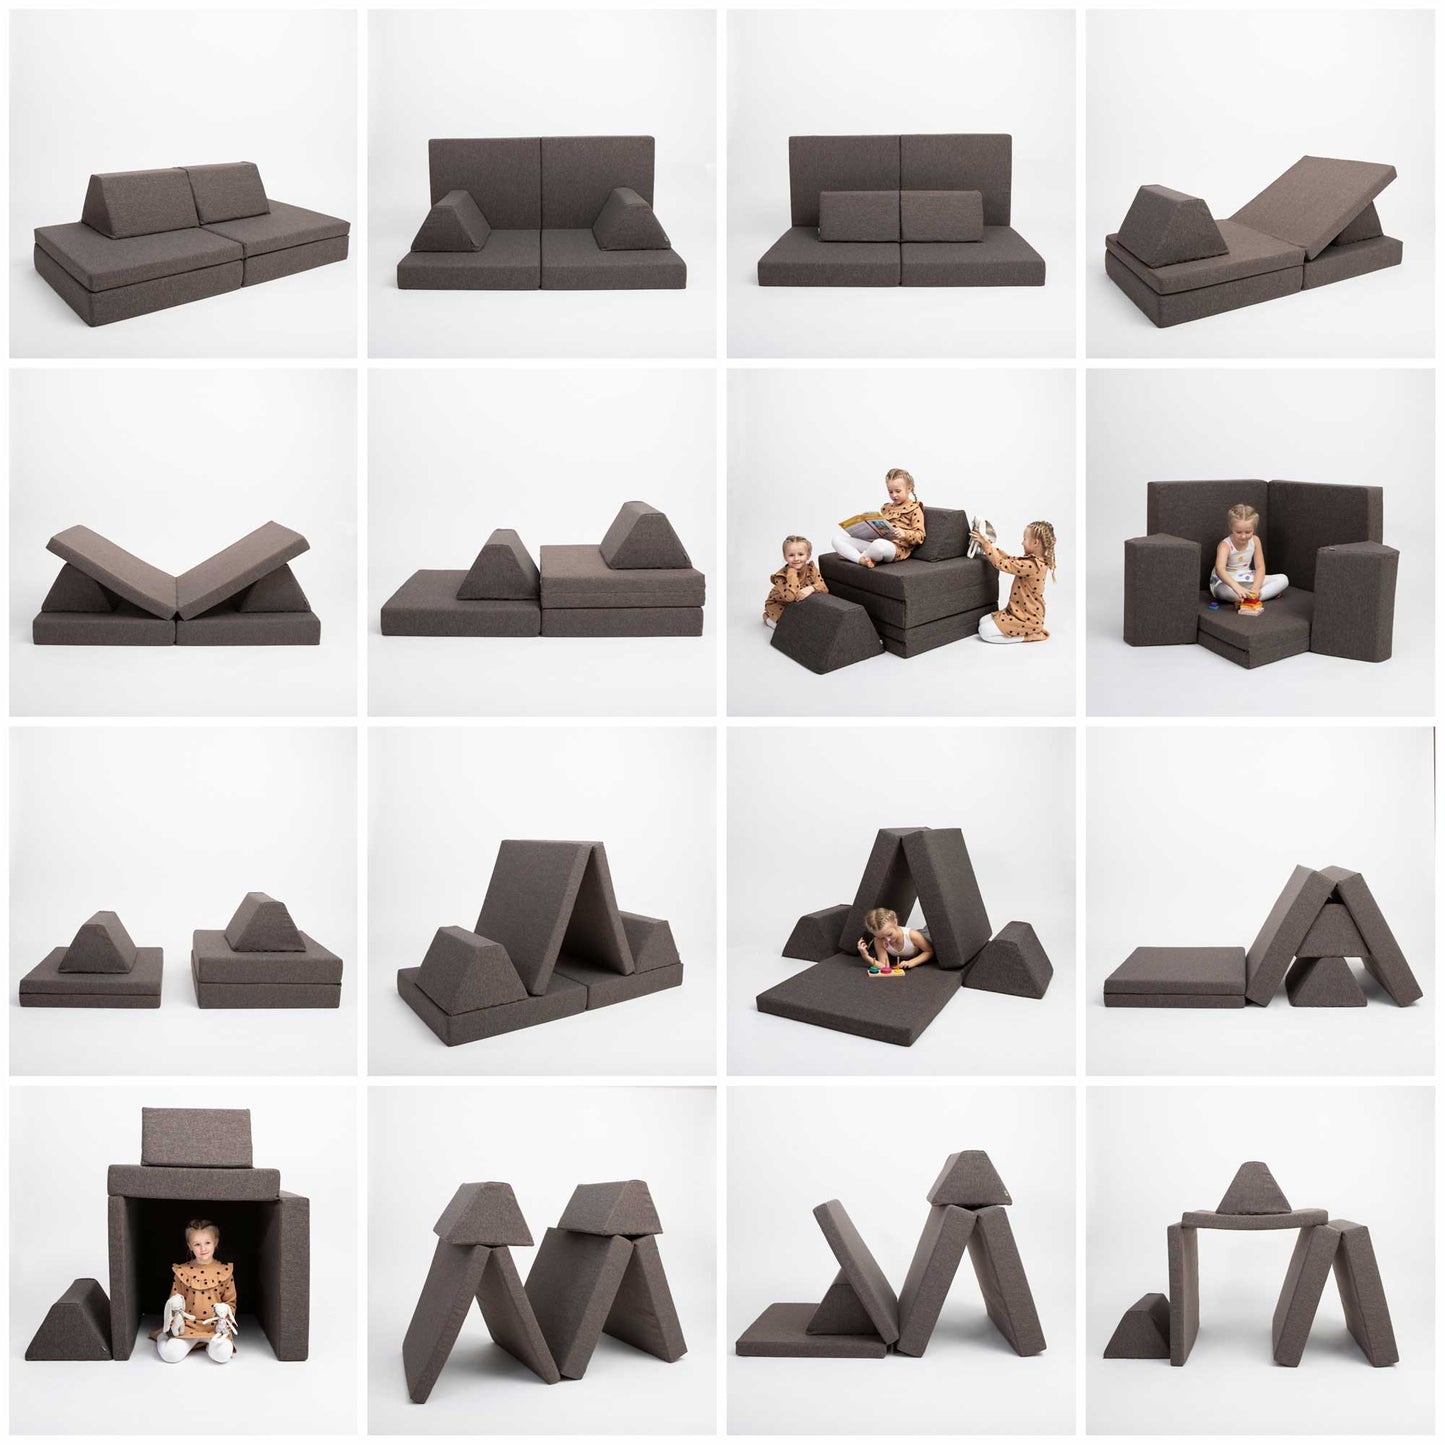 16 build ideas for dark brown Monboxy toddler activity sofa set